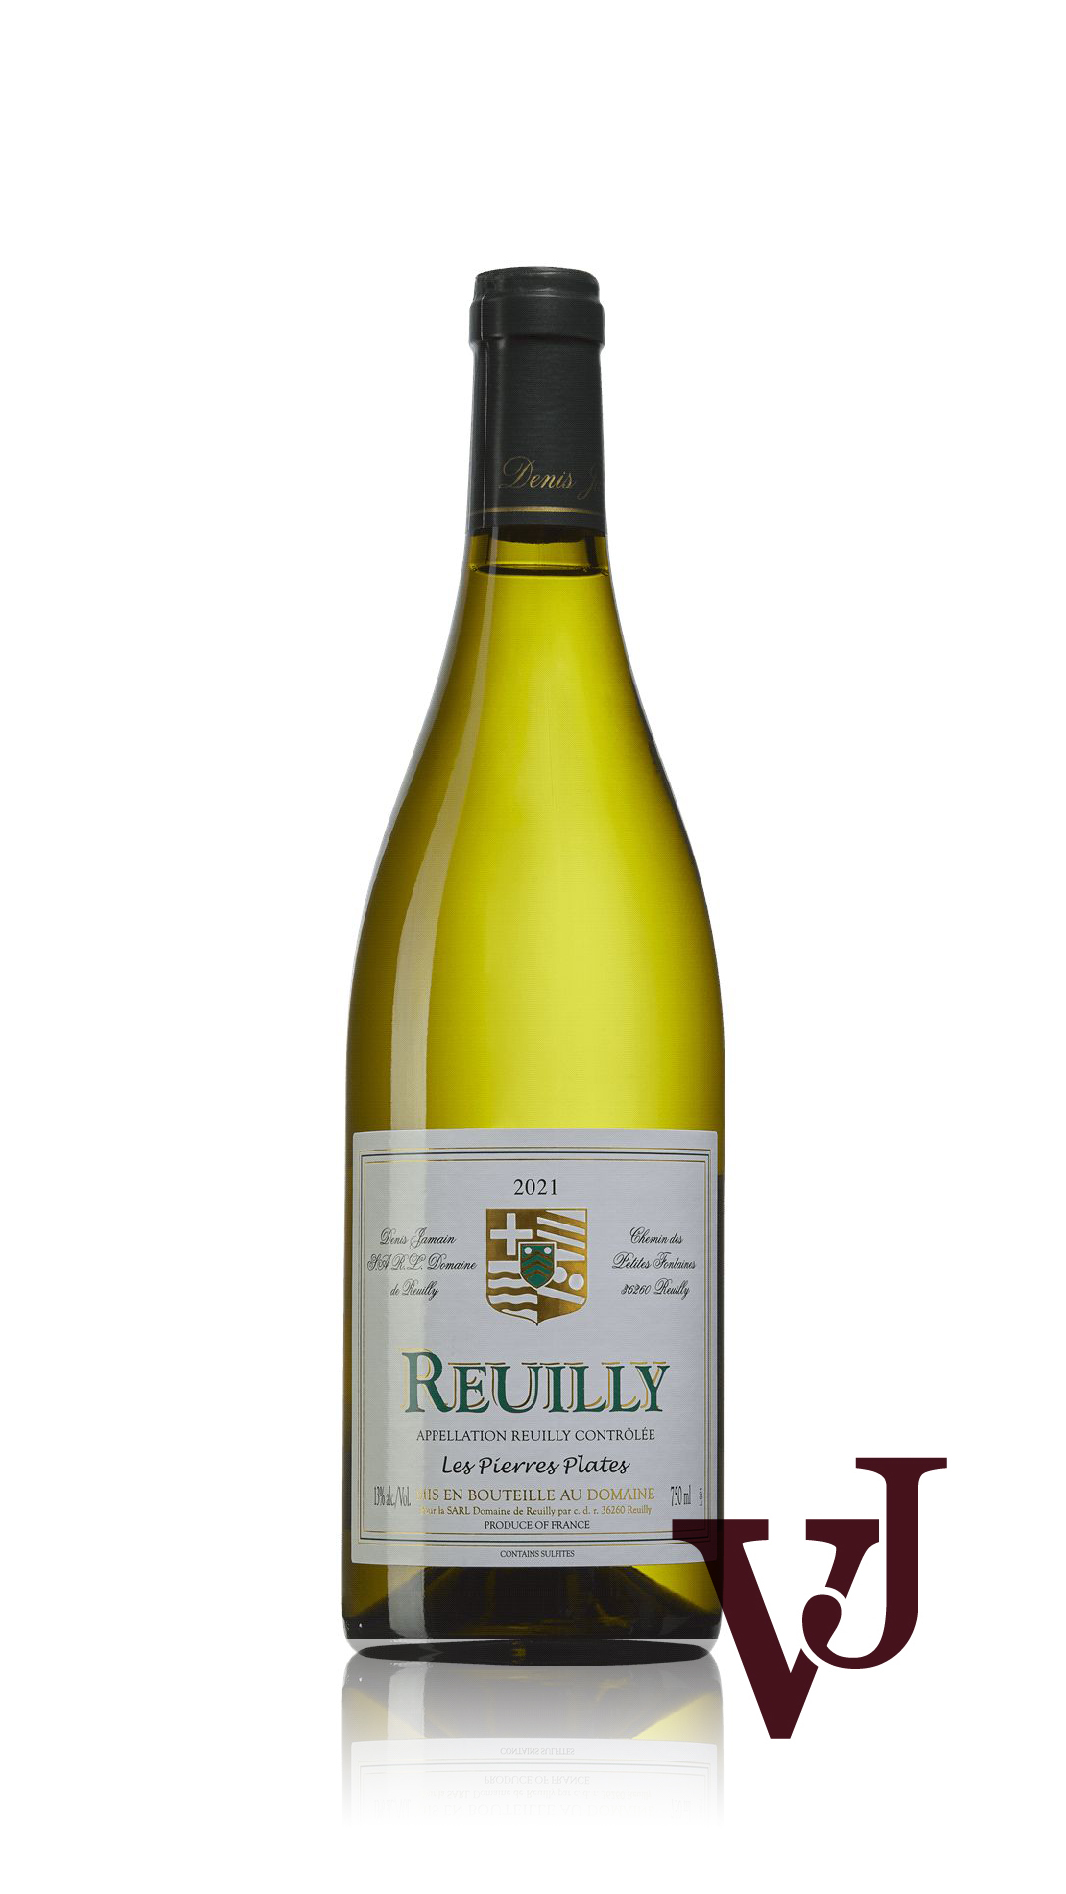 Vitt Vin - Reuilly Les Pierres Plates Domaine de Reuilly artikel nummer 9510601 från producenten Domaine de Reuilly från området Frankrike